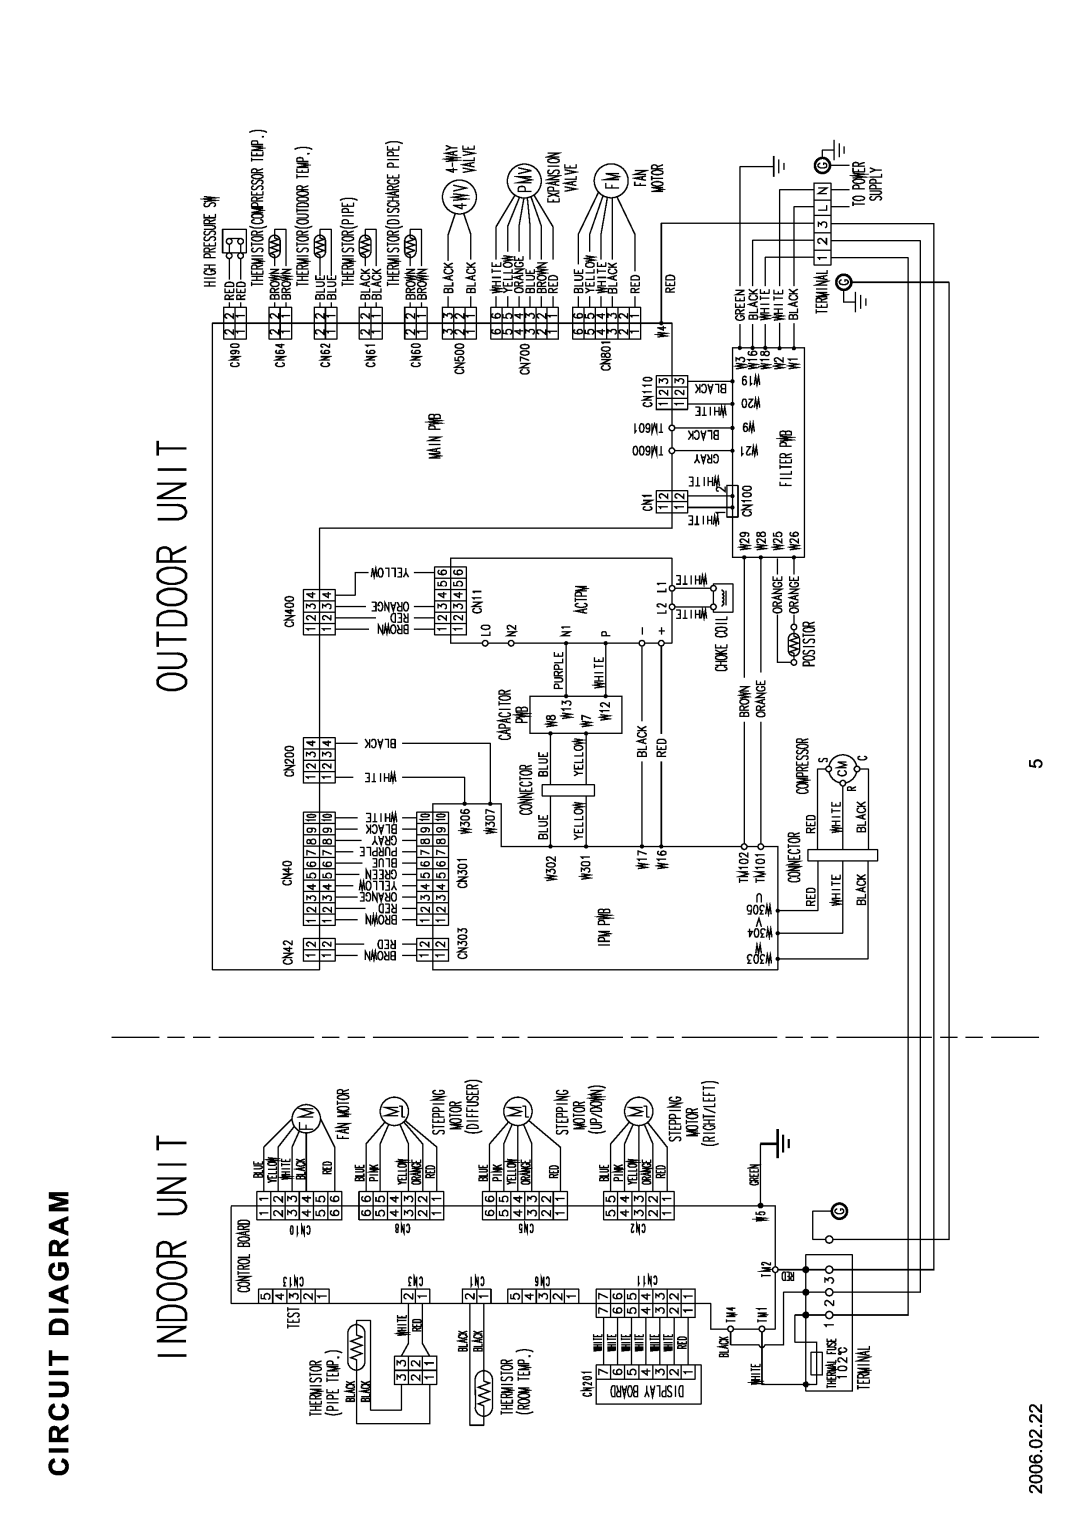 Friedrich MW30C3F, MR30C3F specifications Circuit Diagram, 2006.02.22 